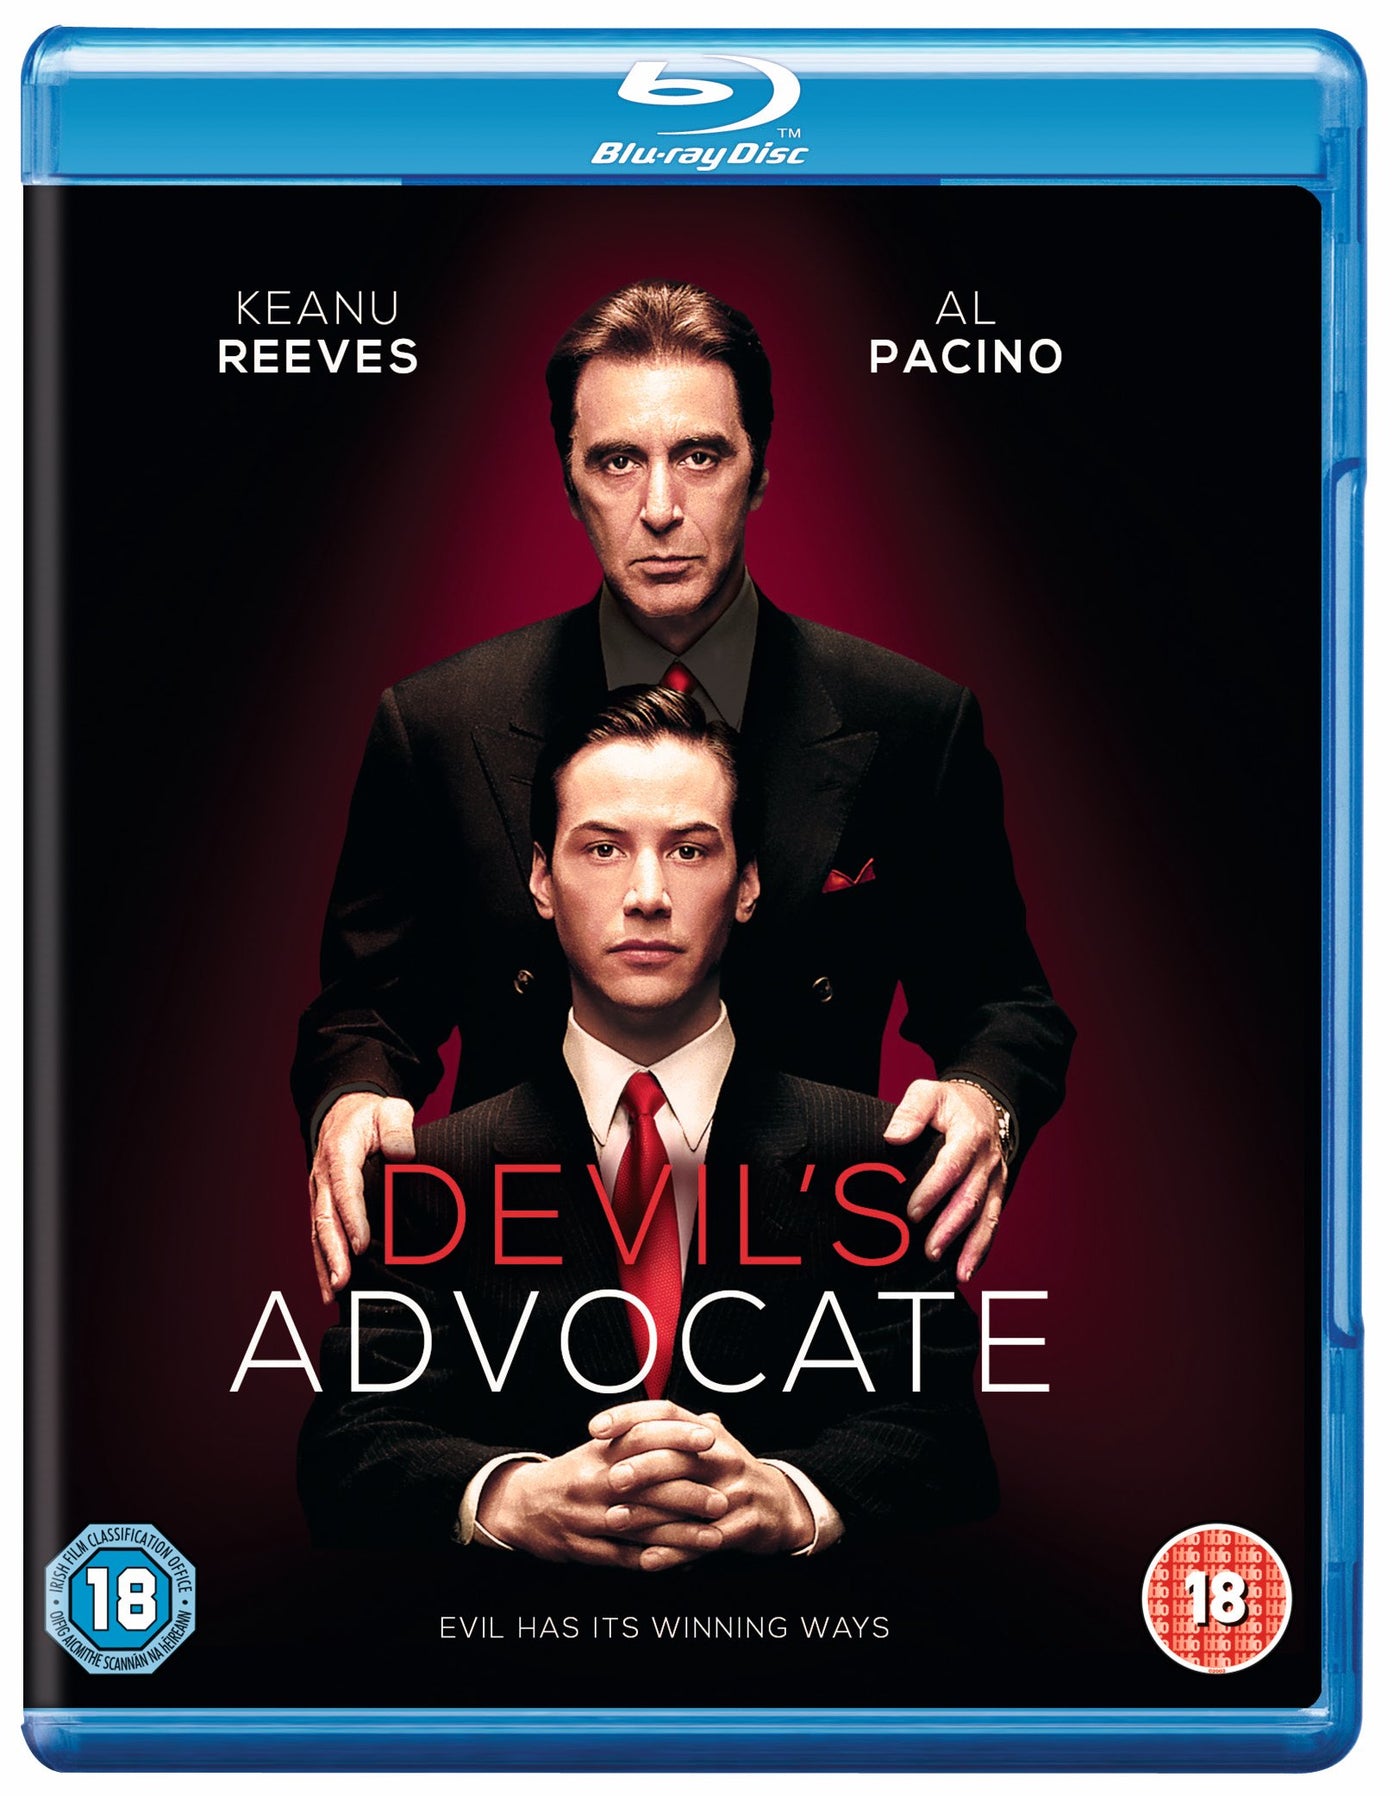 Devil's Advocate [1997] (Blu-ray)